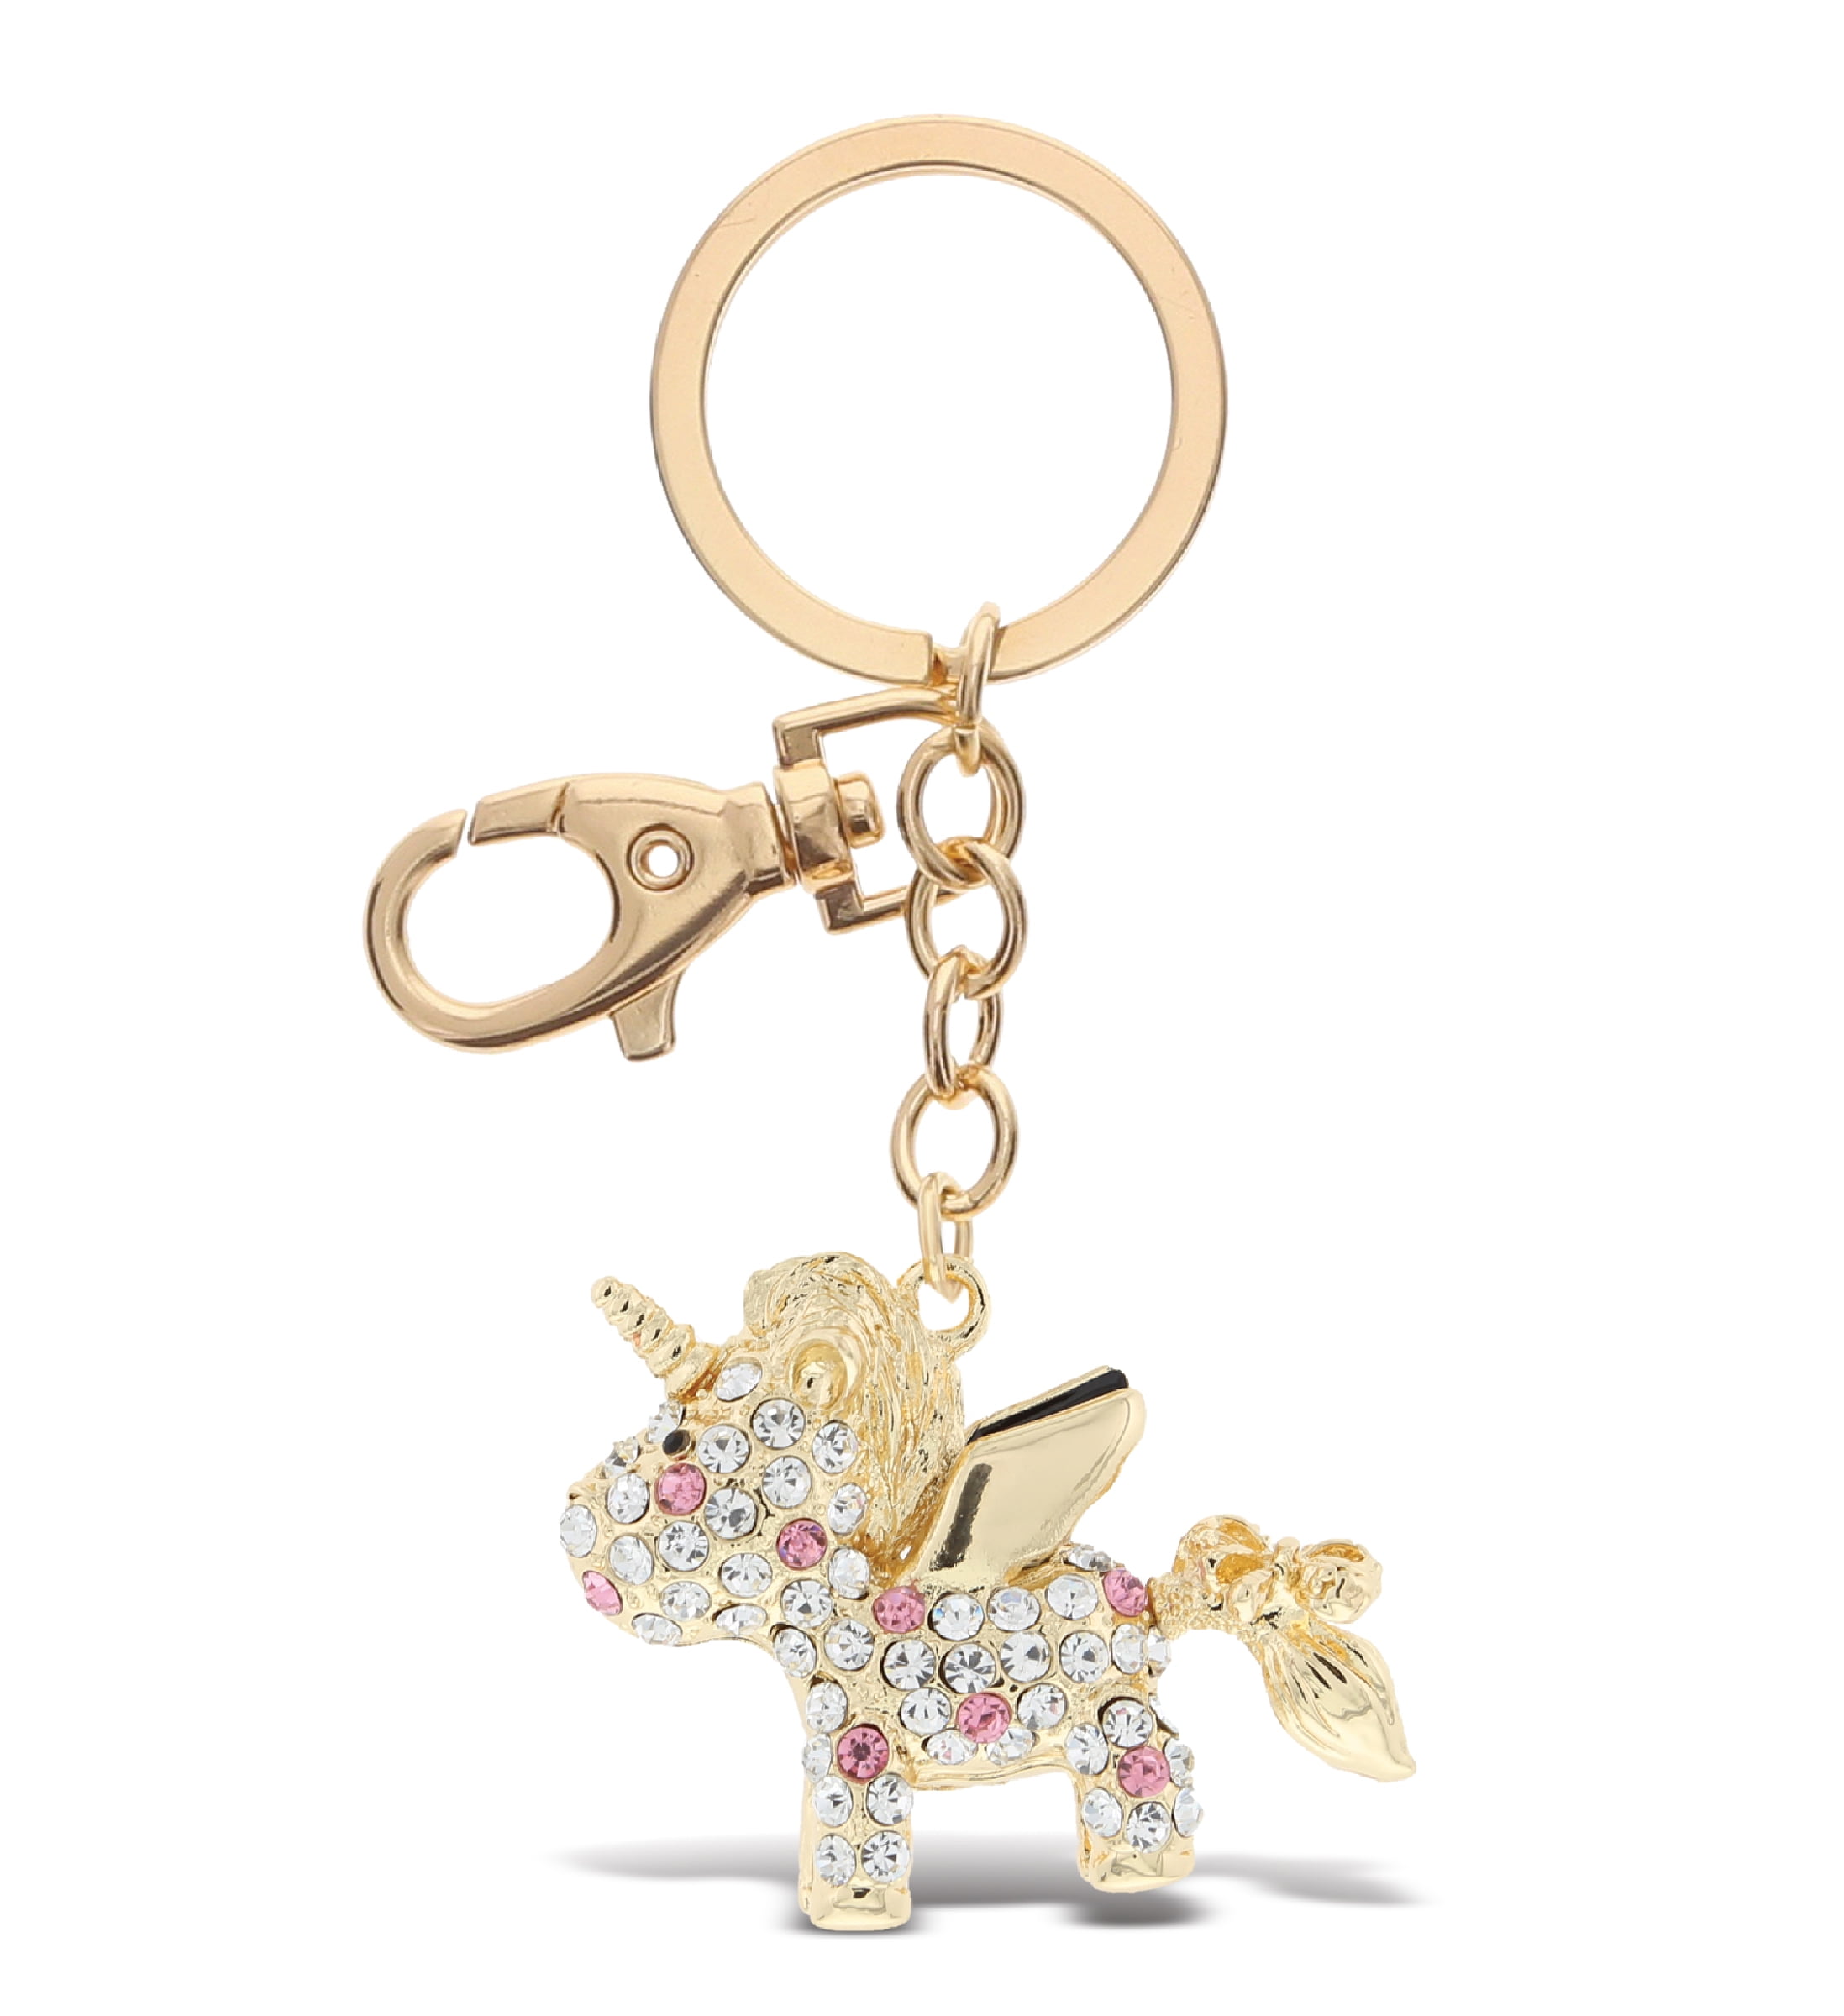 1 x Gold//Pink Unicorn Rhinestone key ring key chain bag charm crystal gift bling